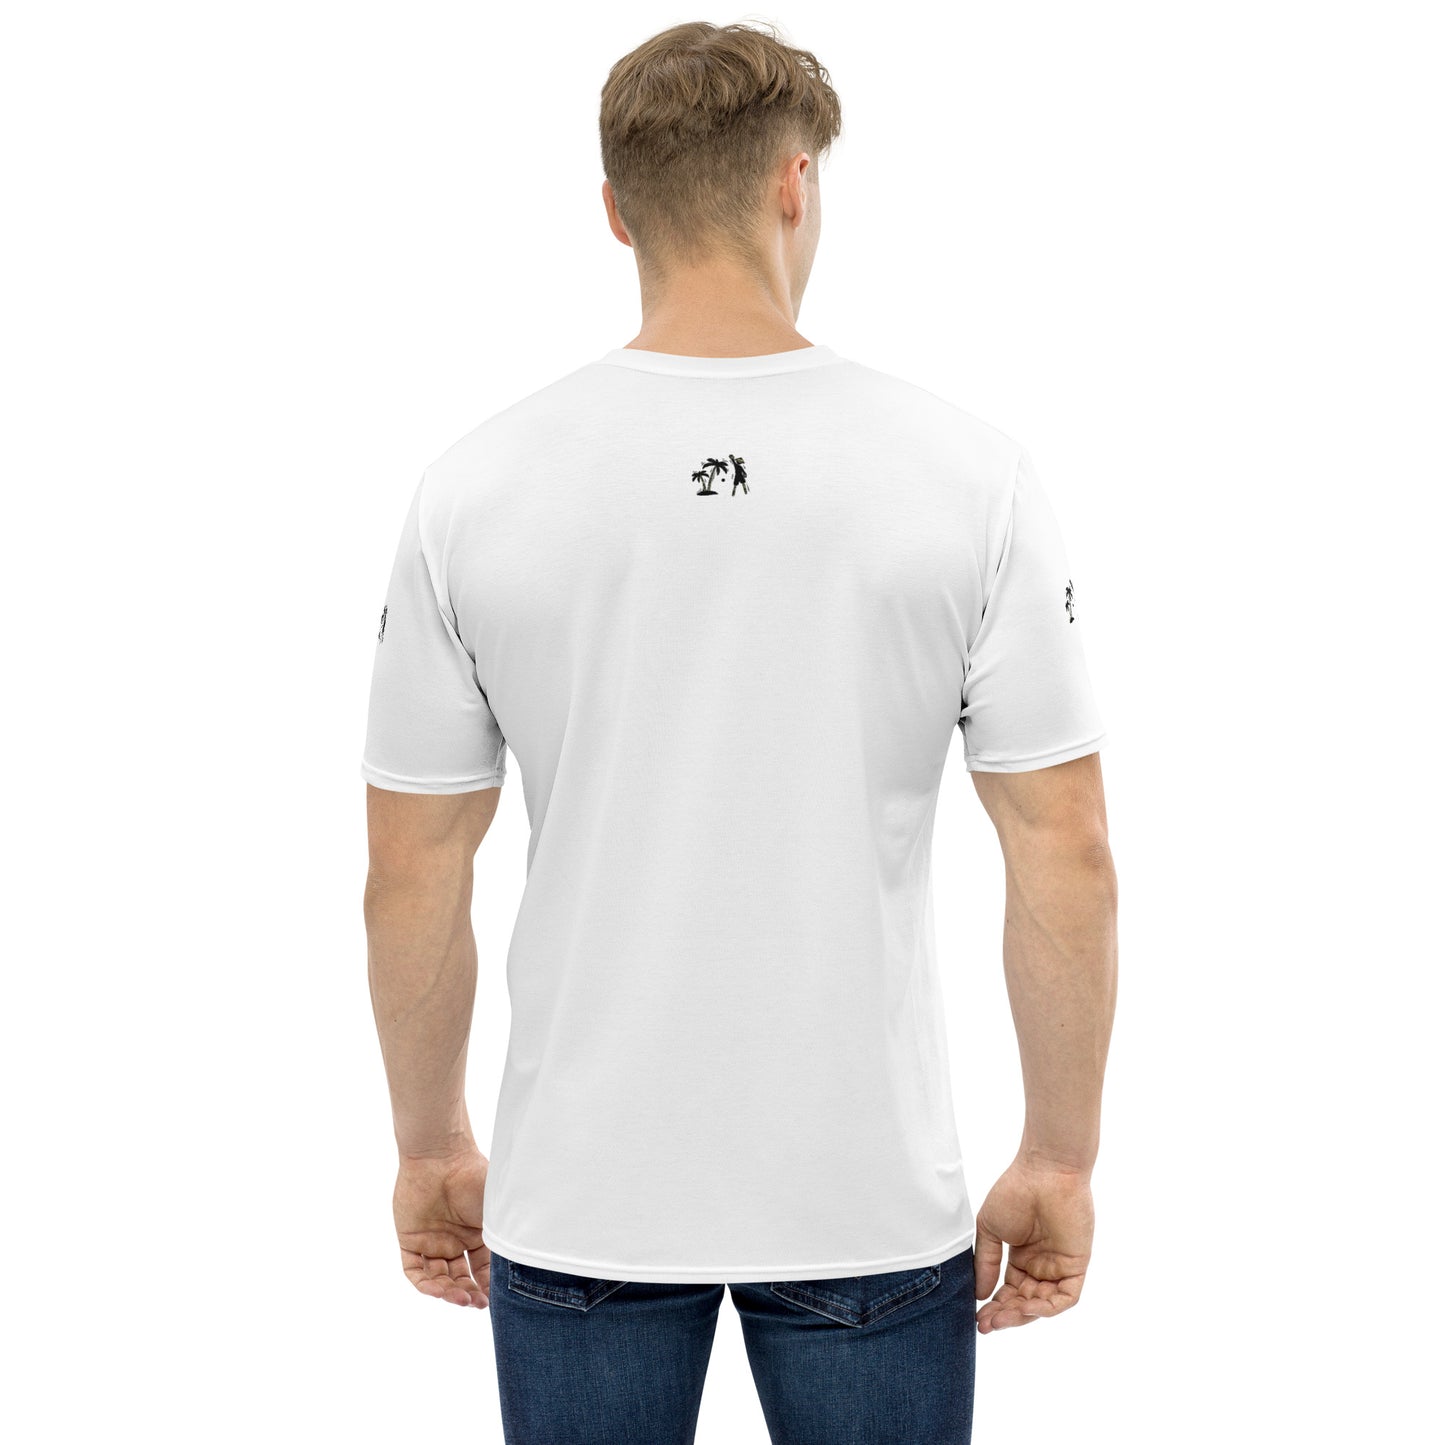 White V.Localized (Camo) Men’s Dry-Fit T-Shirt